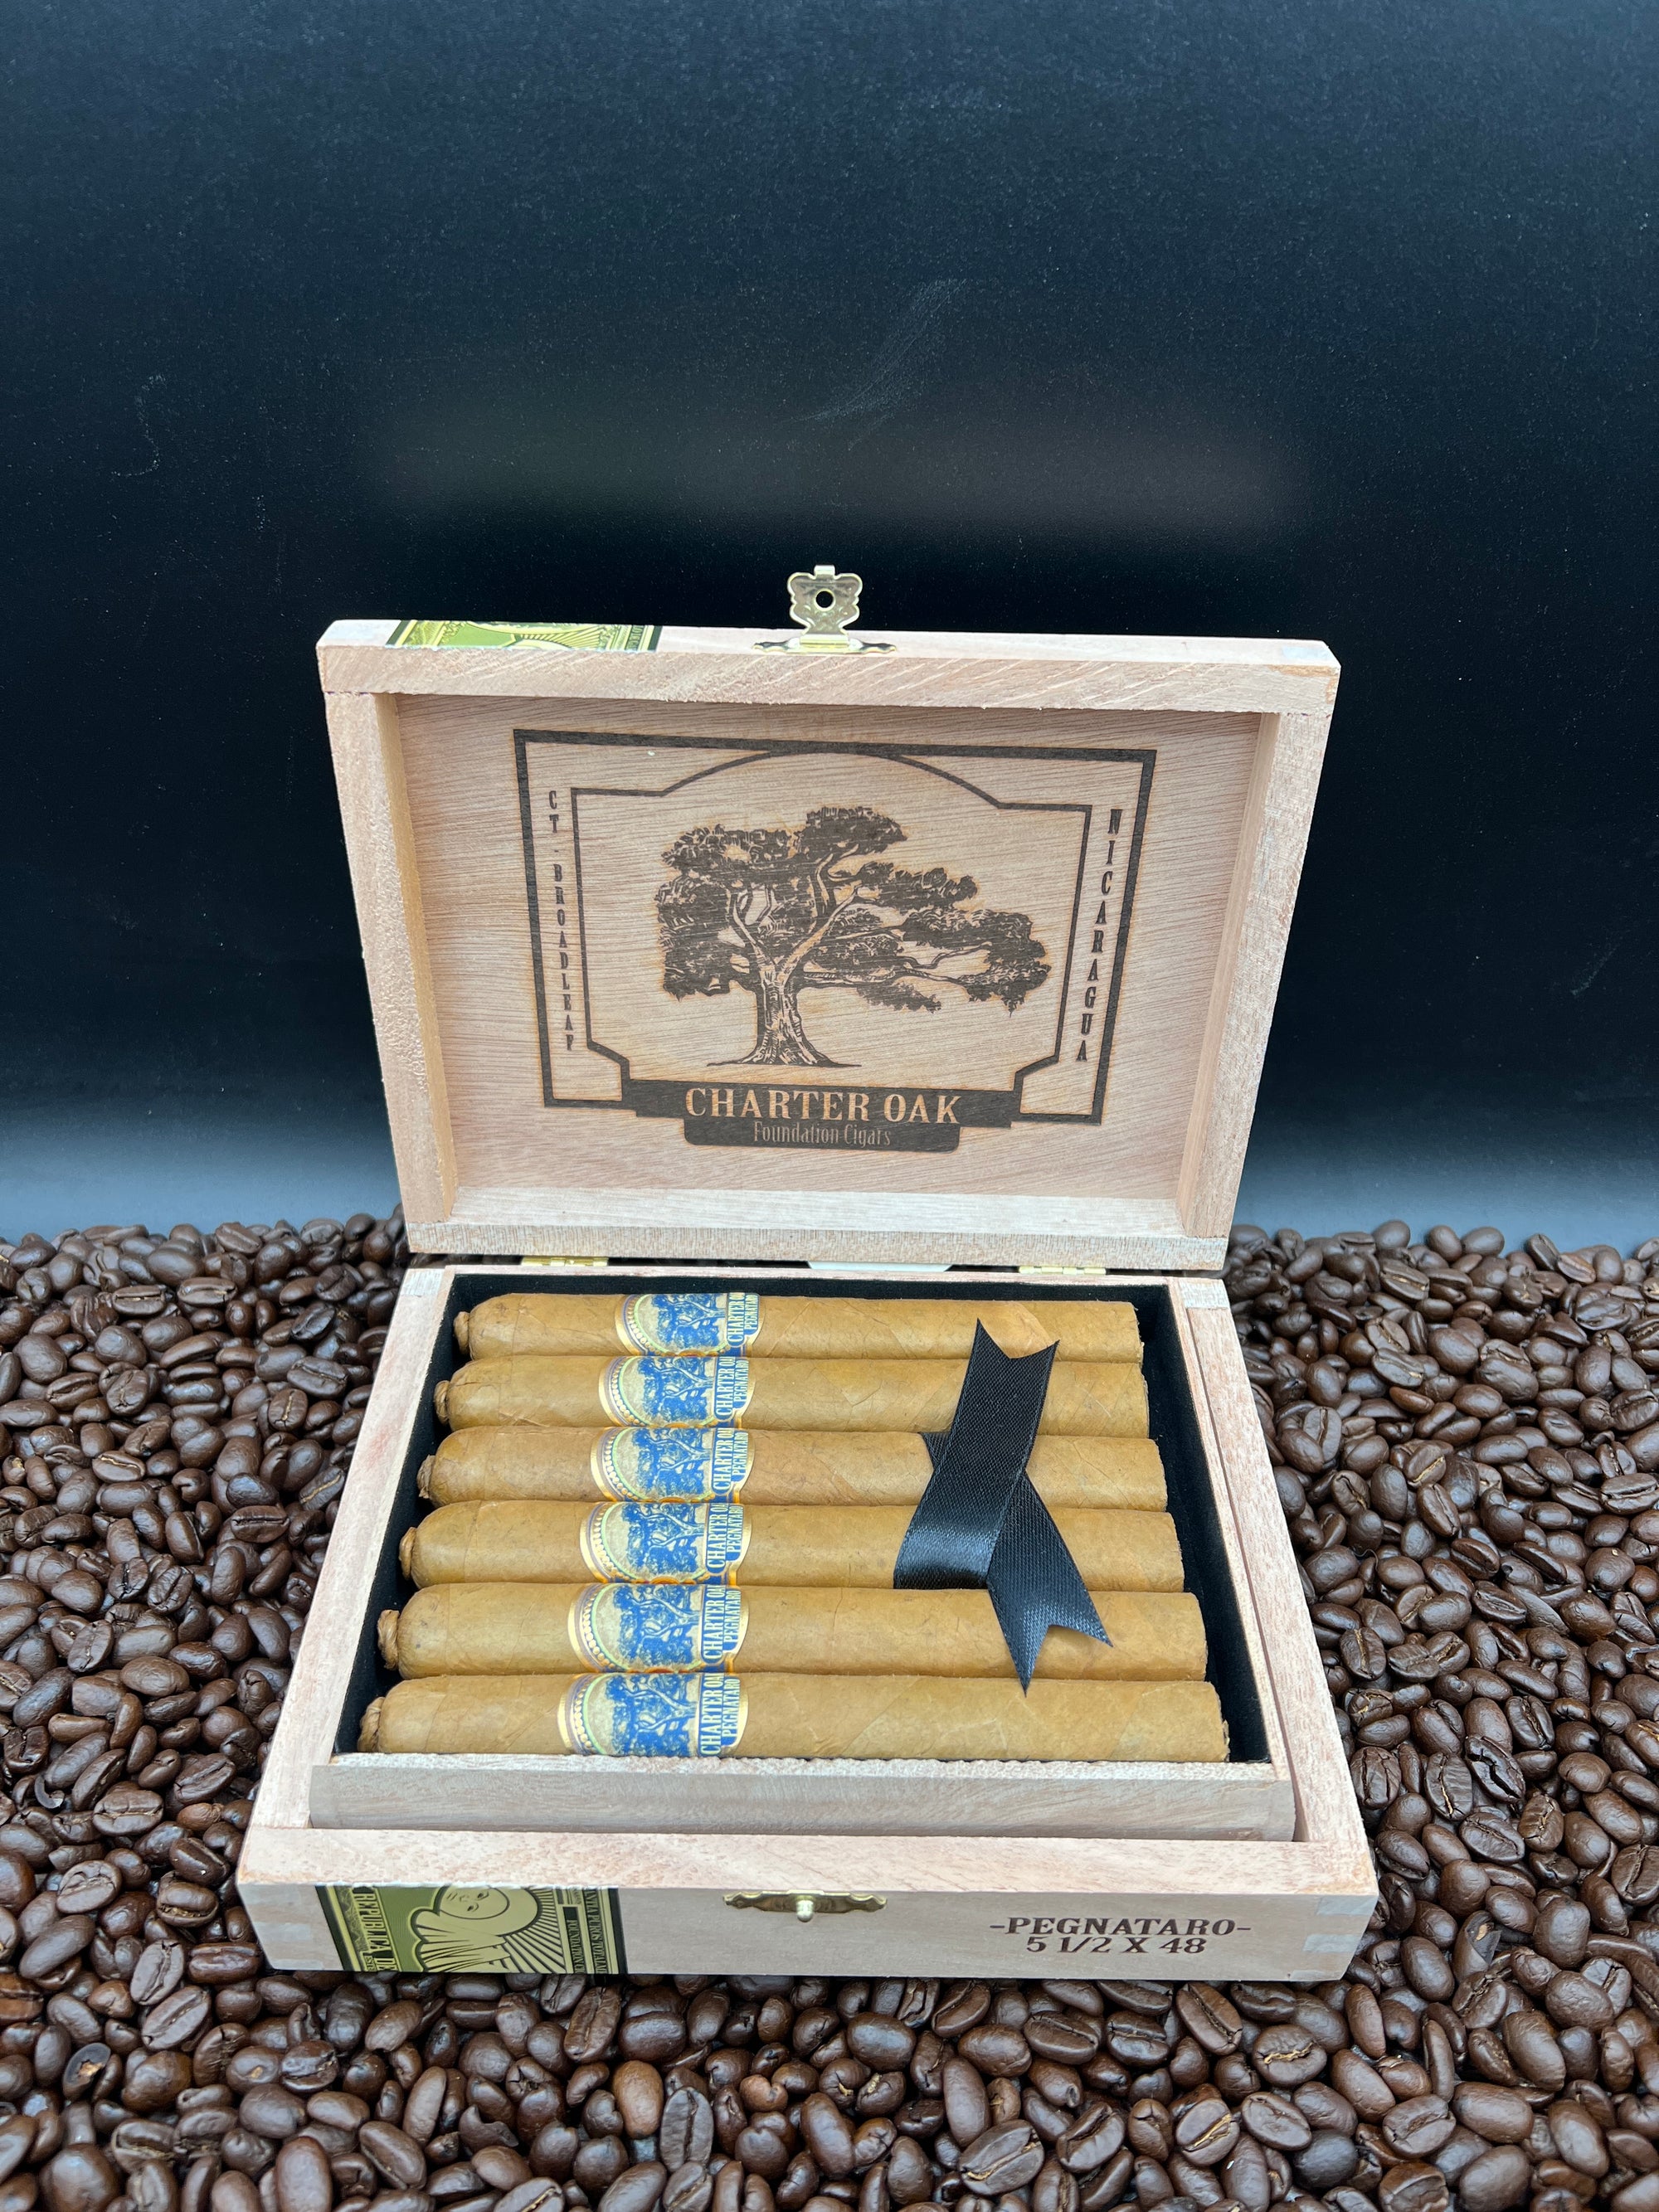 Foundation Cigars - Charter Oak Especiales Pegnataro